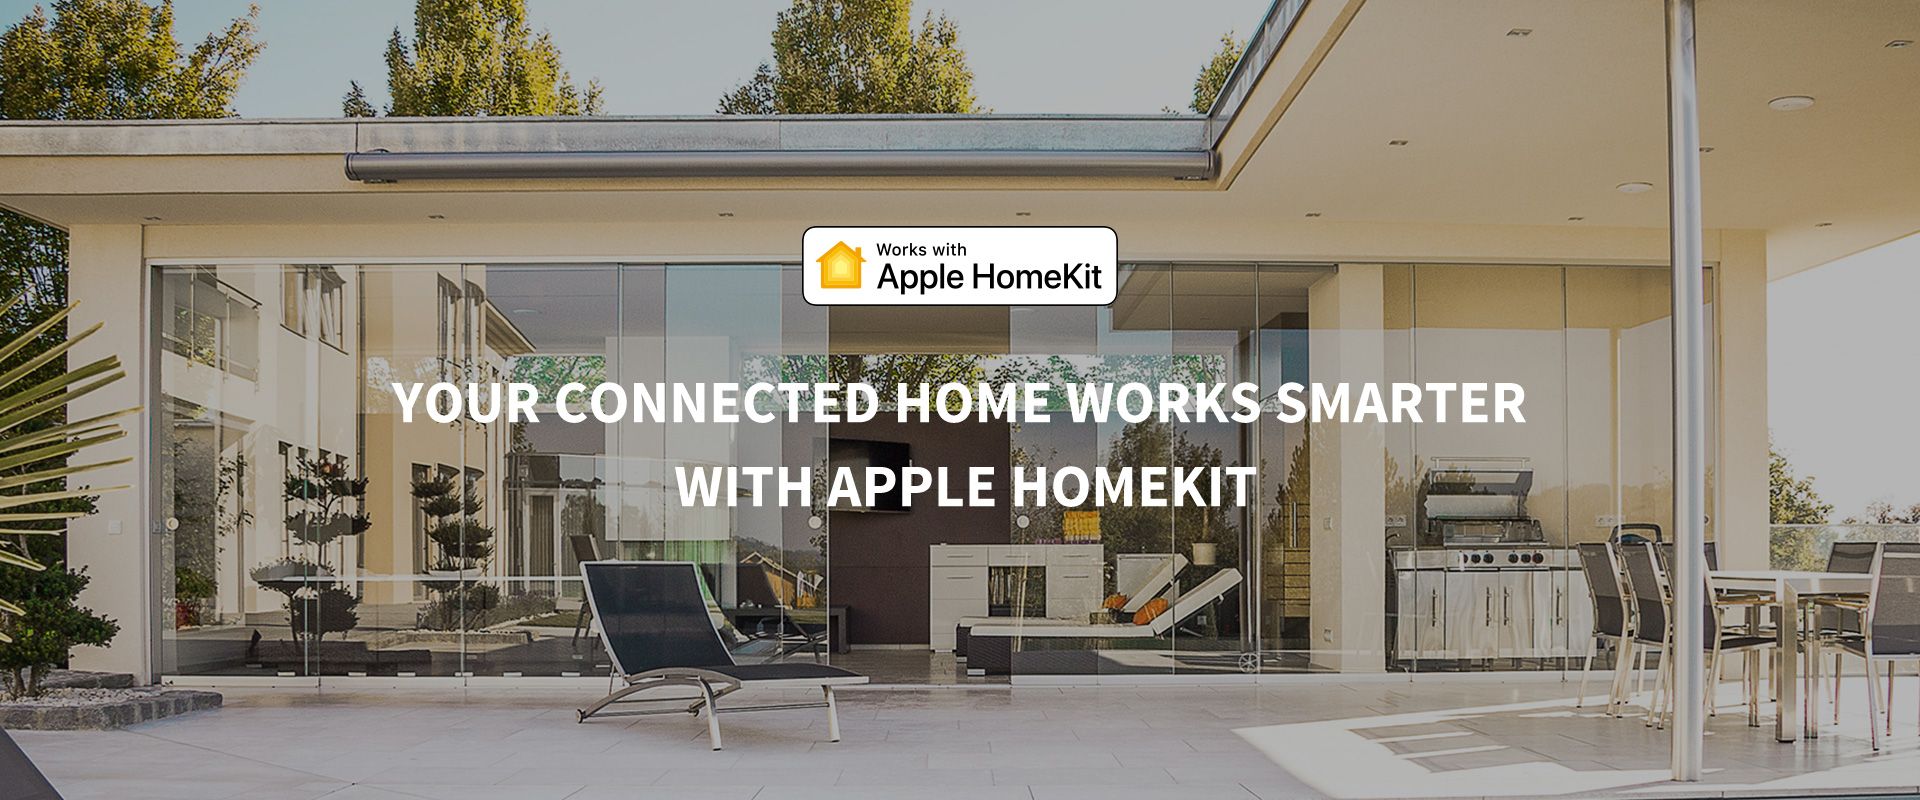 Work with Apple HomeKit